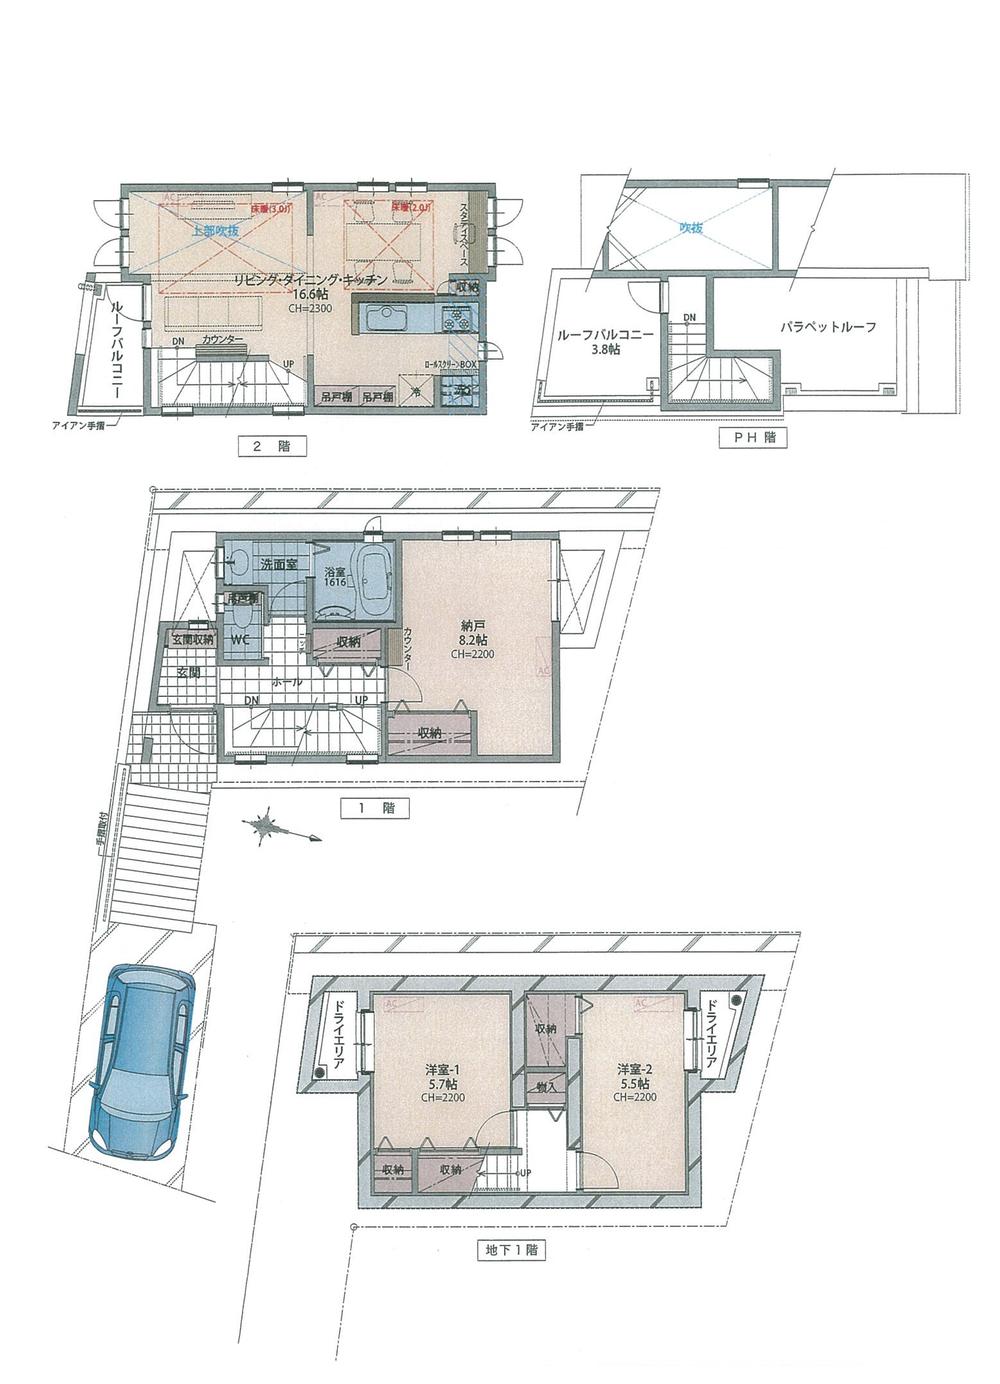 Floor plan. Price 68,800,000 yen, 2LDK+S, Land area 78.74 sq m , Building area 101.97 sq m